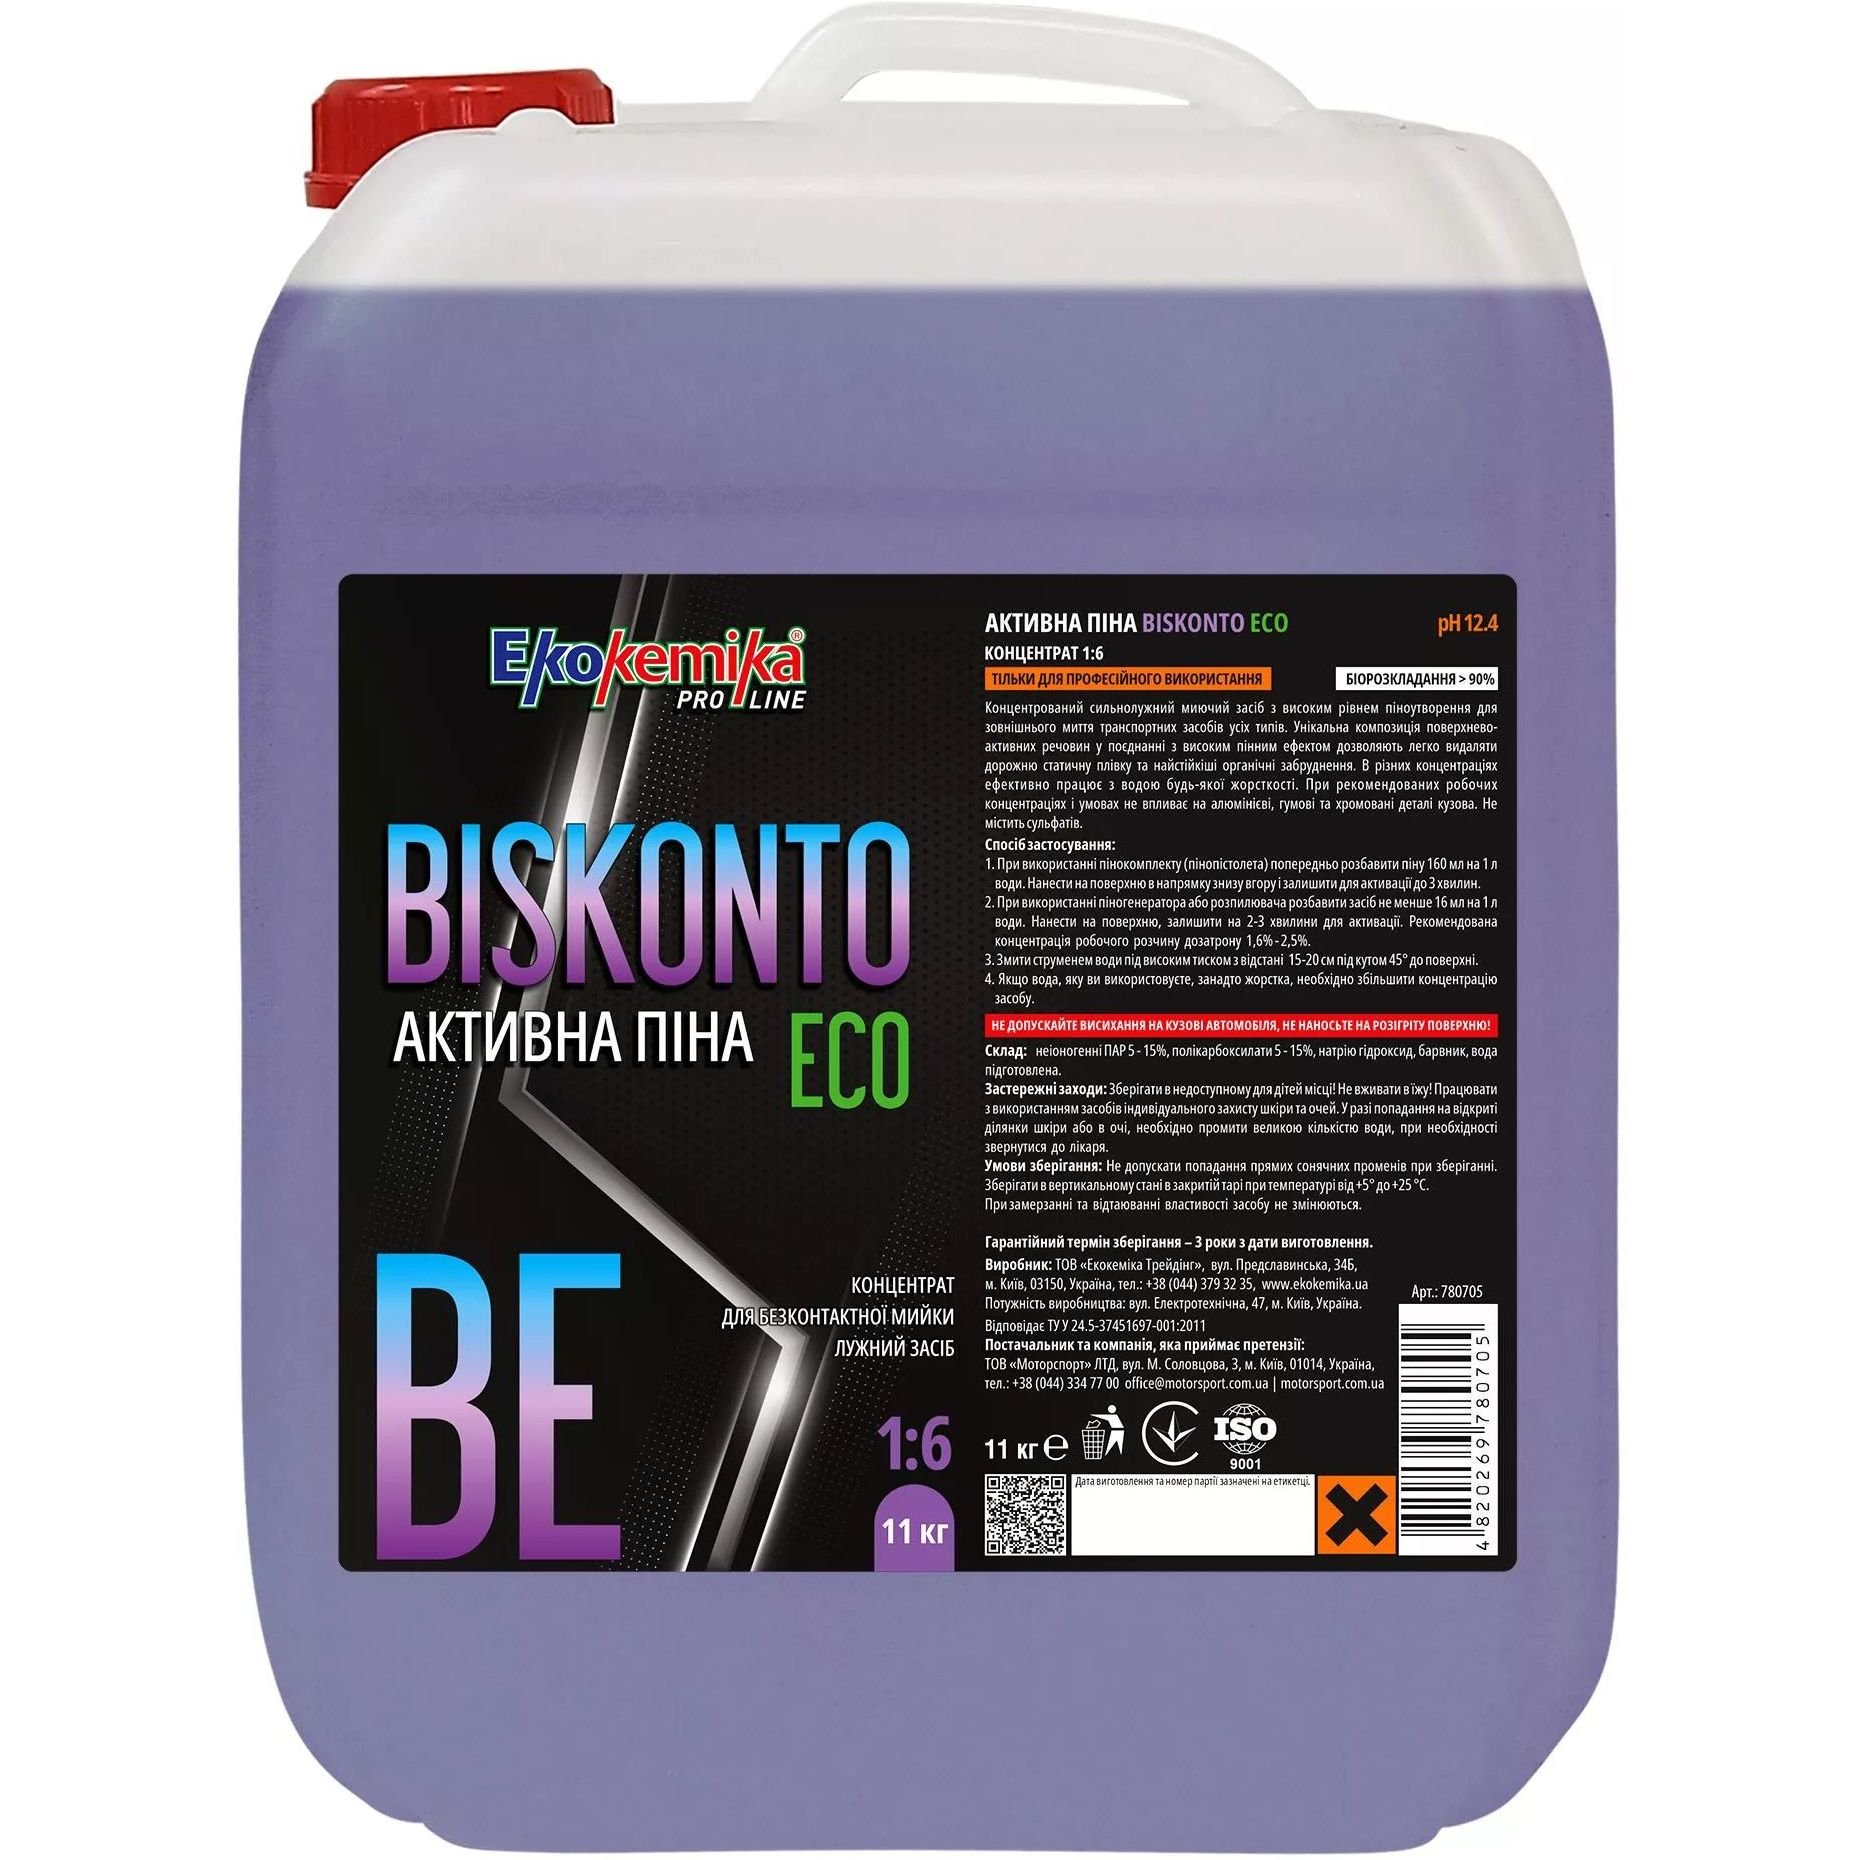 Активная пена Ekokemika Pro Line Biskonto Eco 1:6, 11 кг (780705) - фото 1